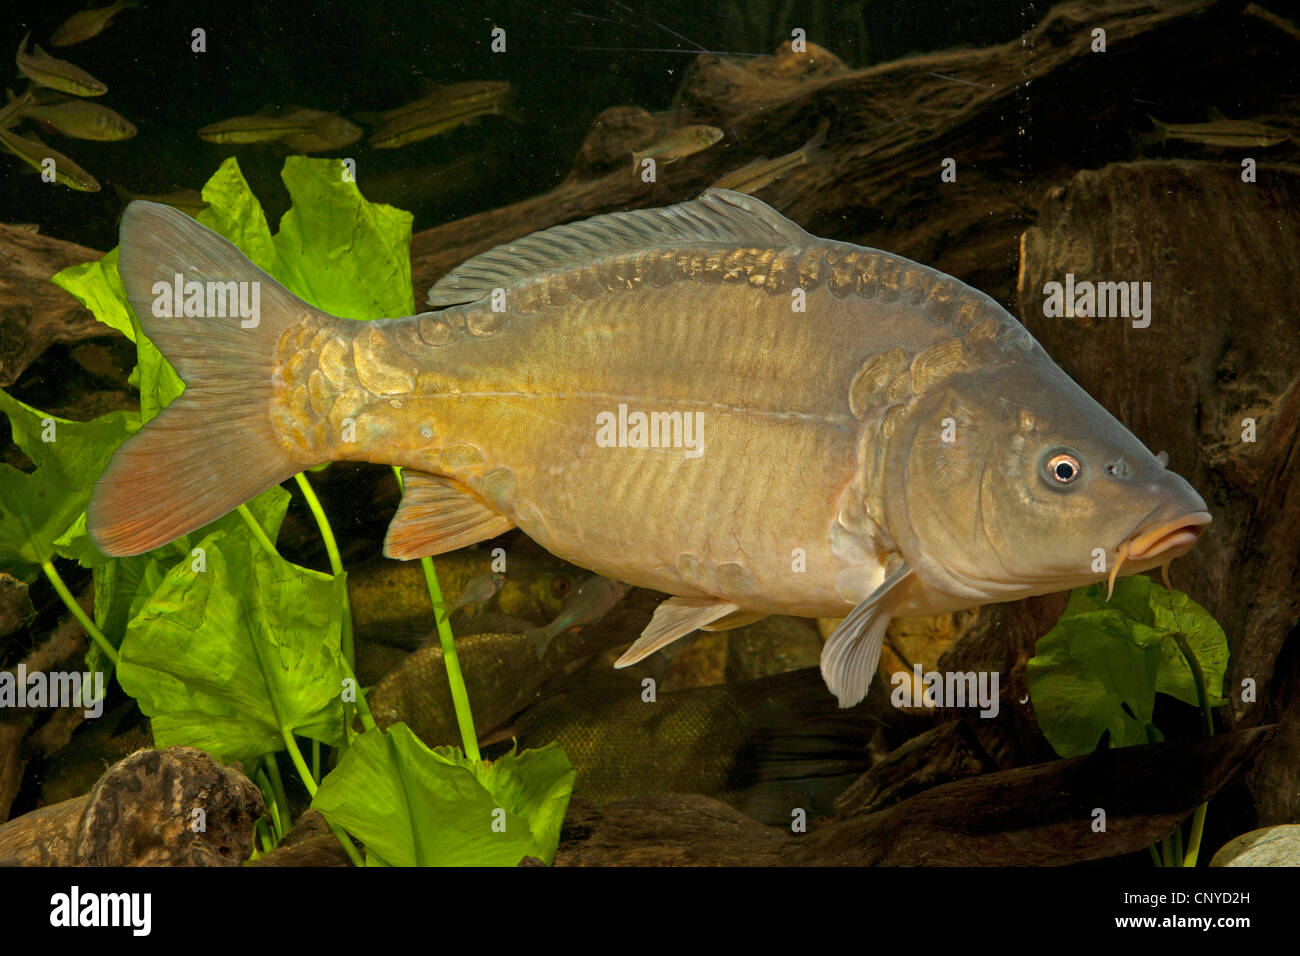 carp, common carp, European carp (Cyprinus carpio), mirror carp swimming among dead wood Stock Photo